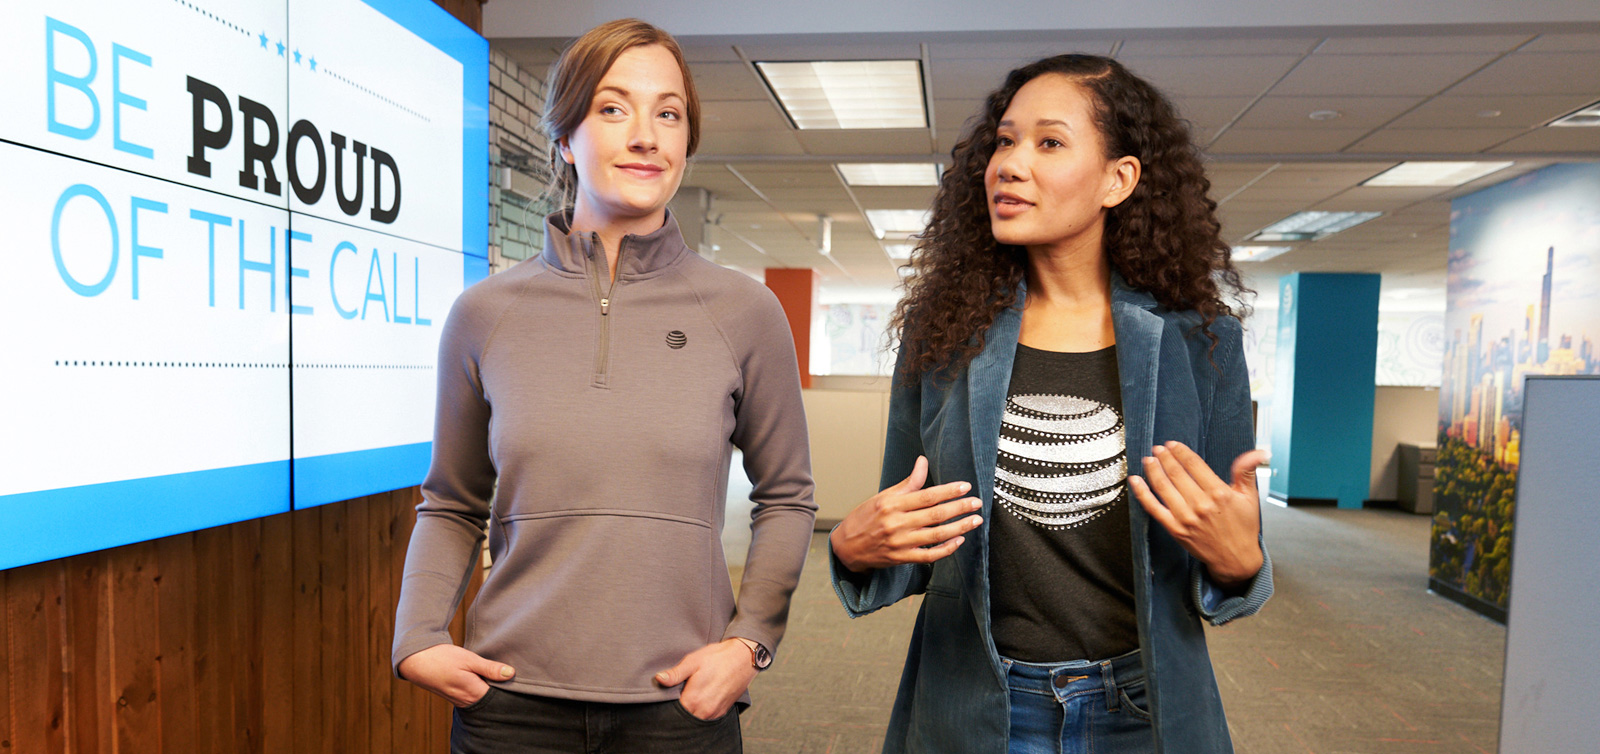 Two women walk and talk through an office hallway